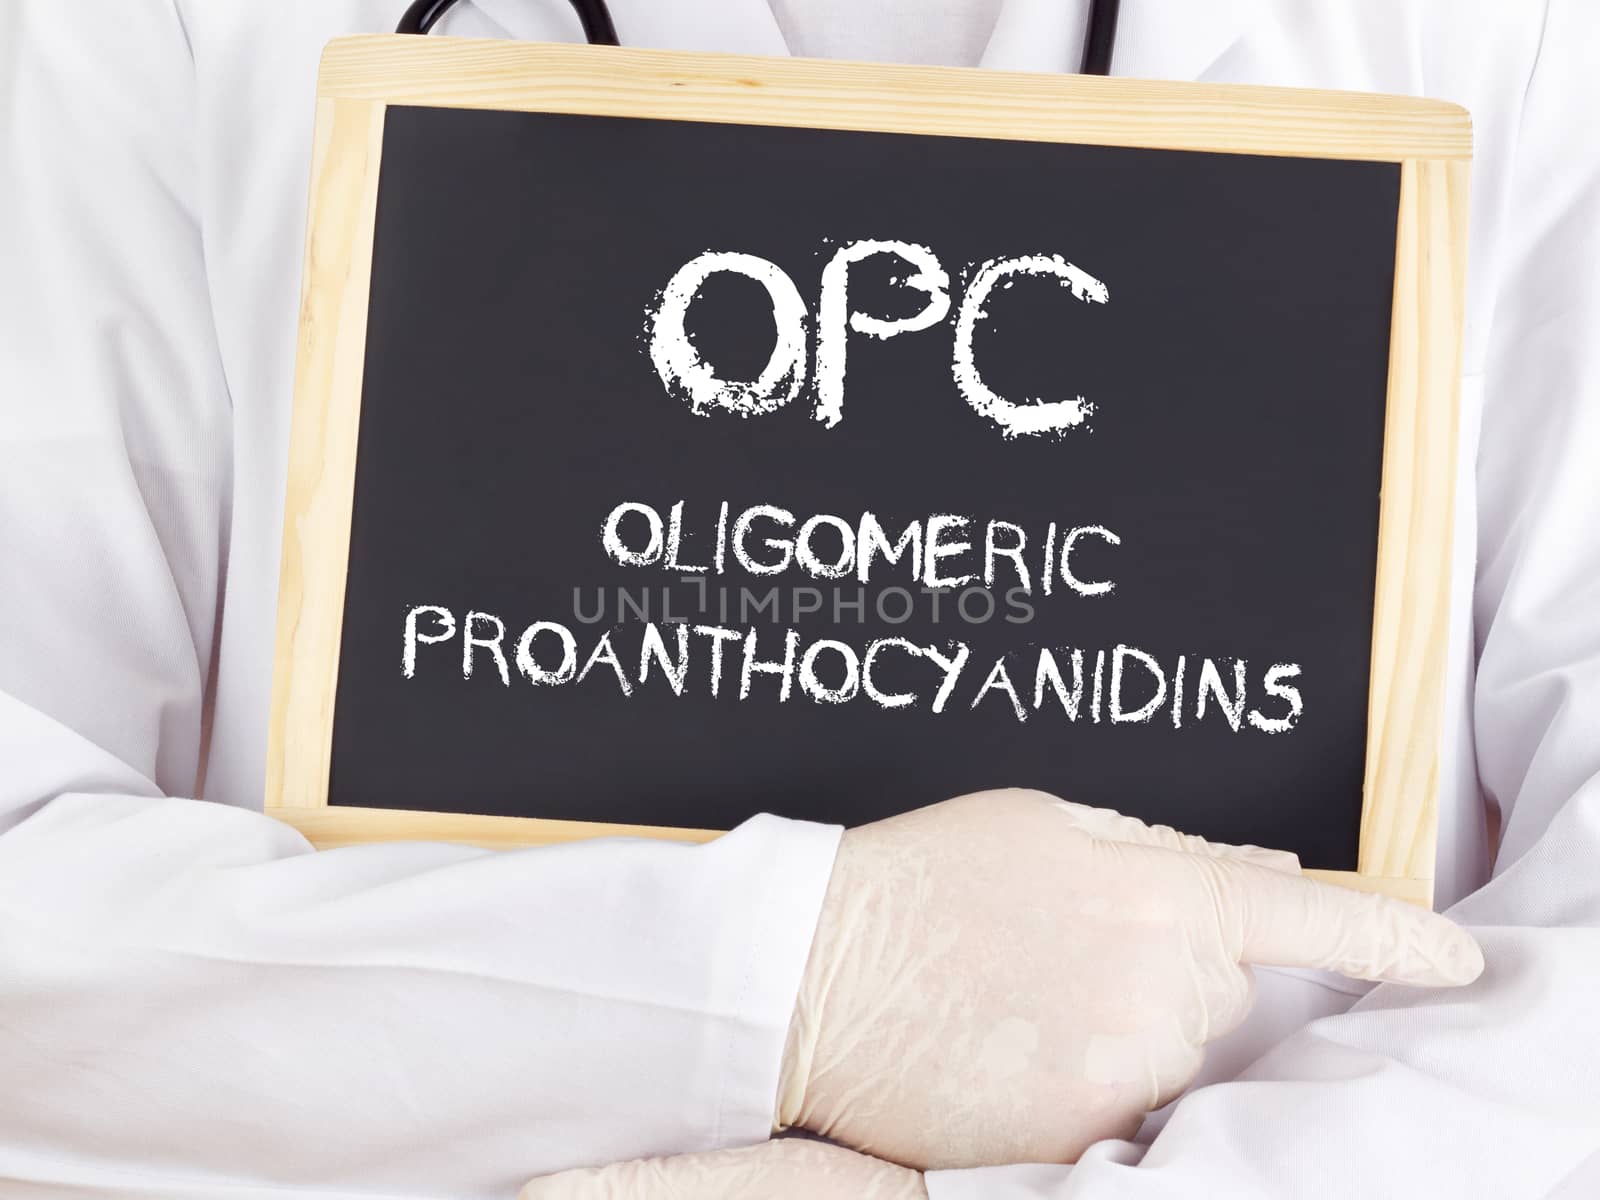 Doctor shows information: Oligomeric proanthocyanidins